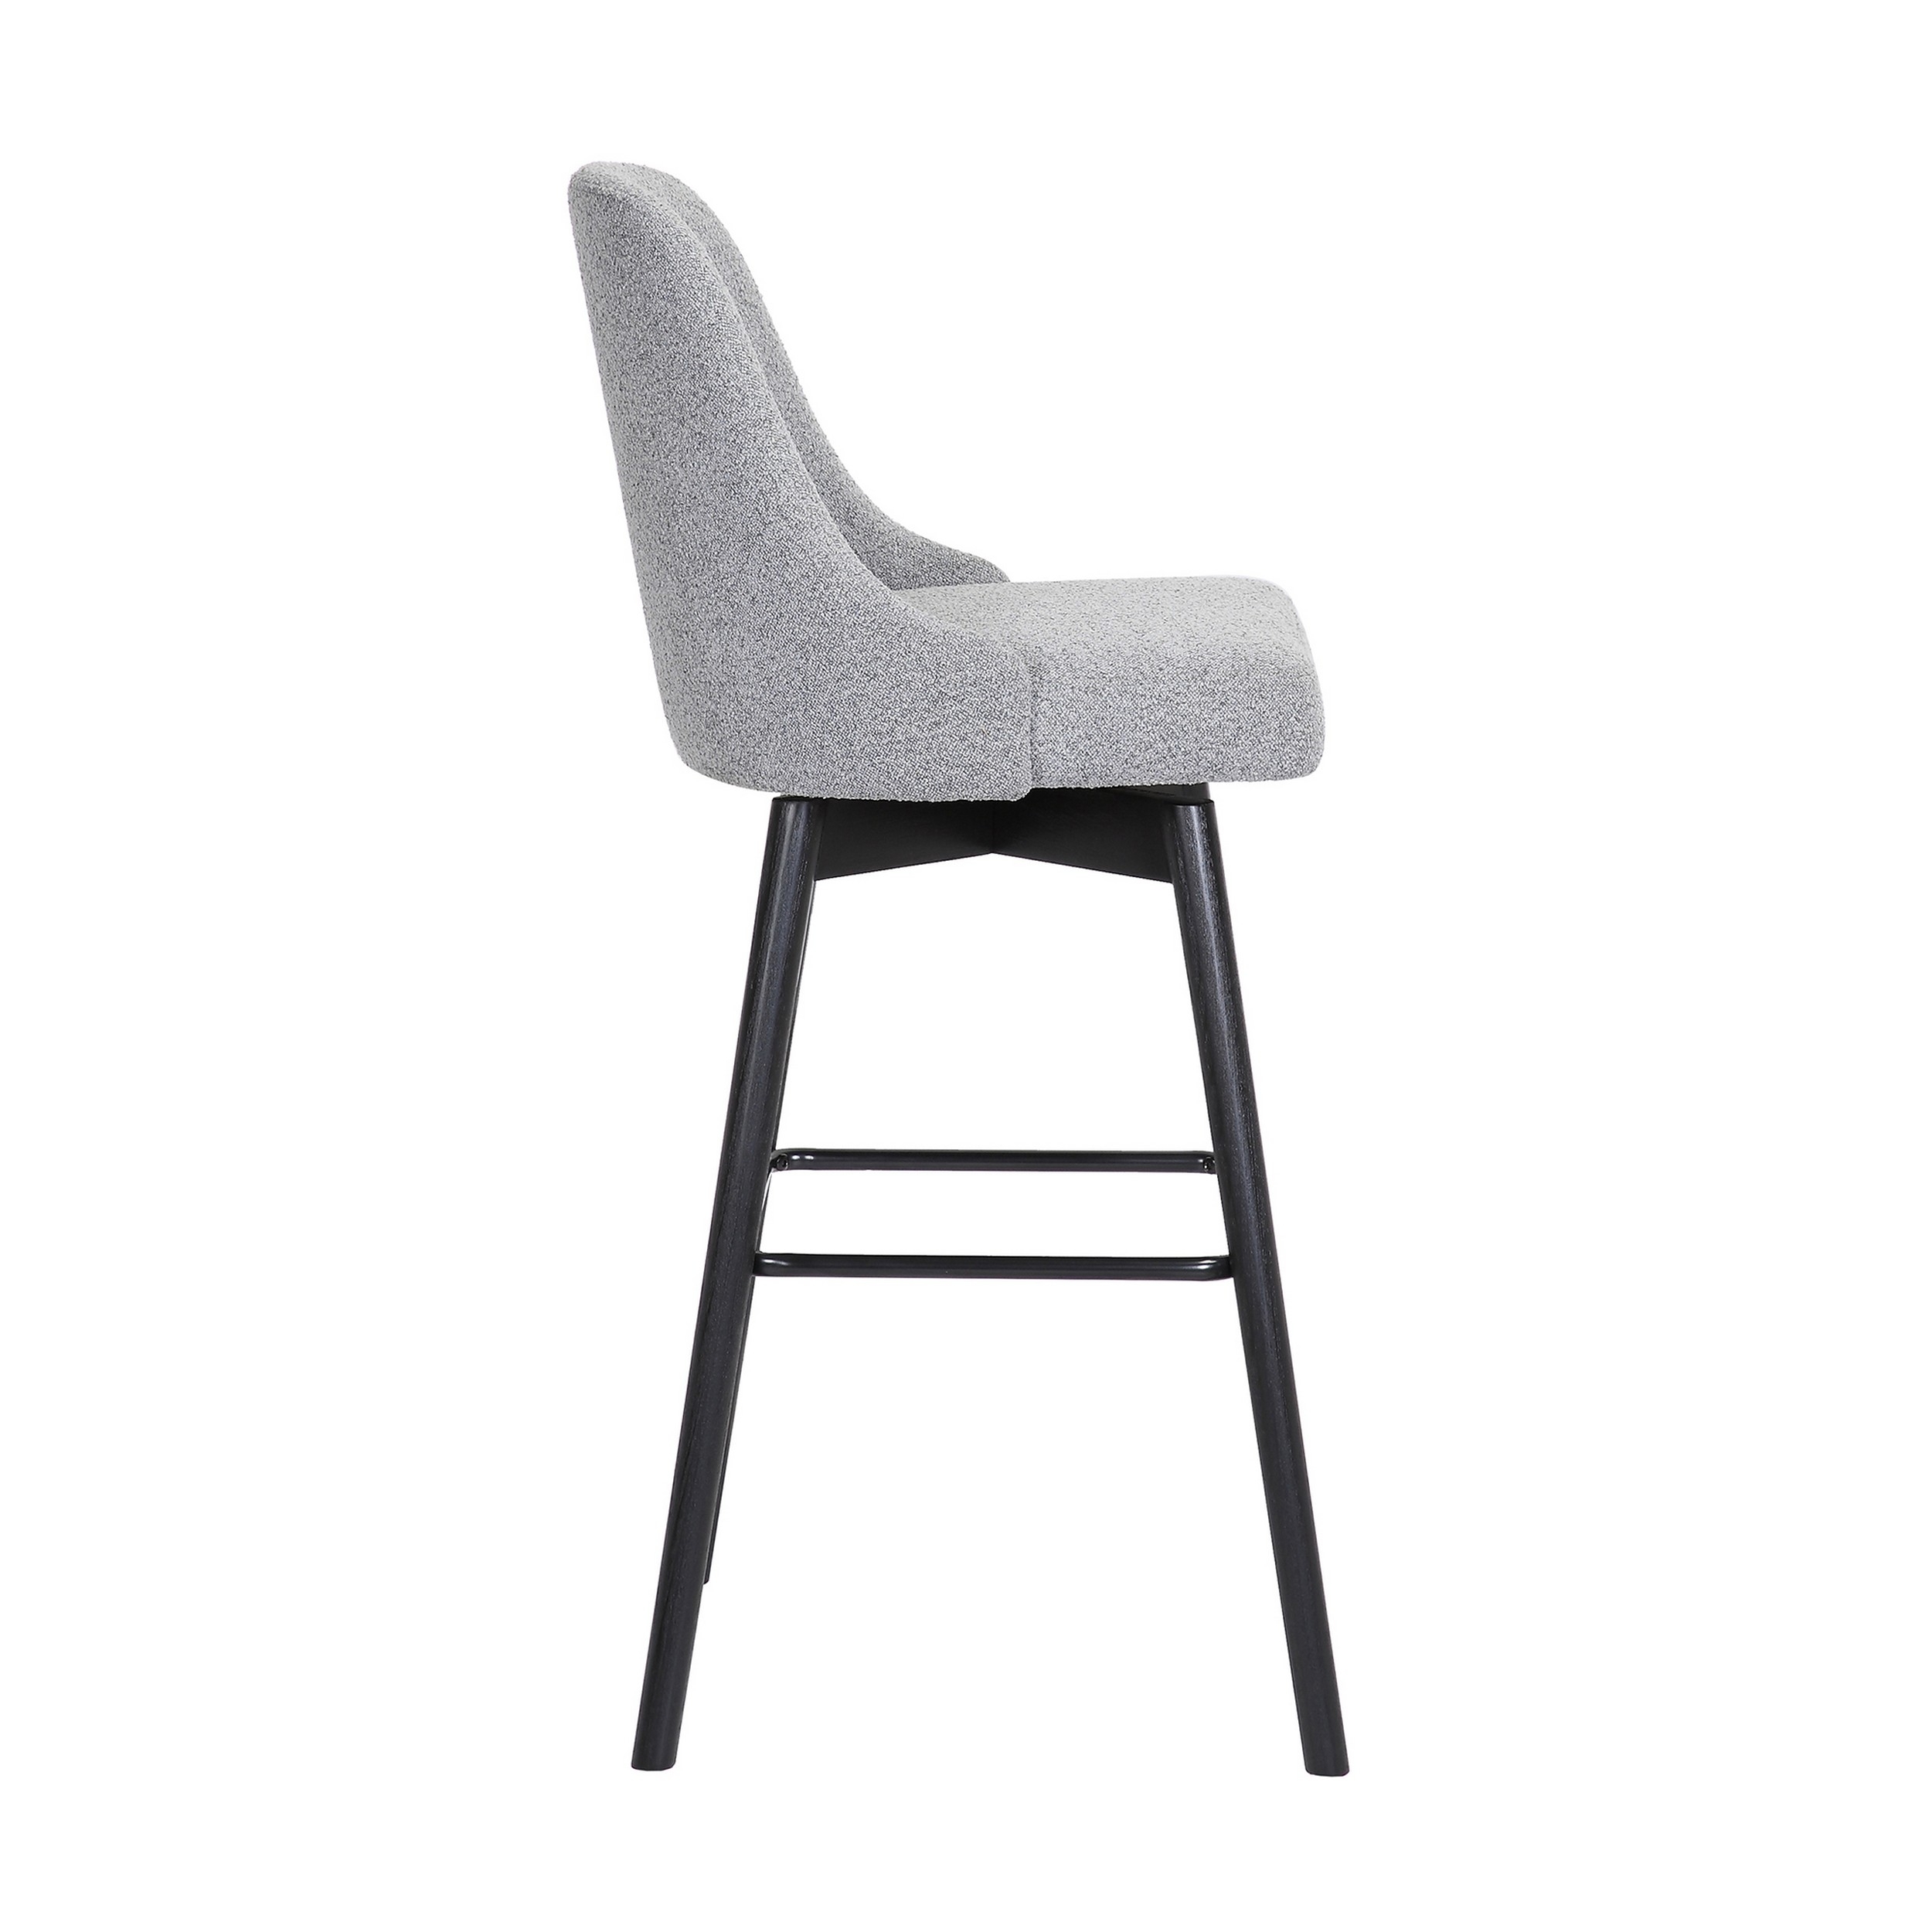 Sean 30 Inch Barstool Chair, Parson Style, Swivel, Light Gray Fabric, Black - Saltoro Sherpi